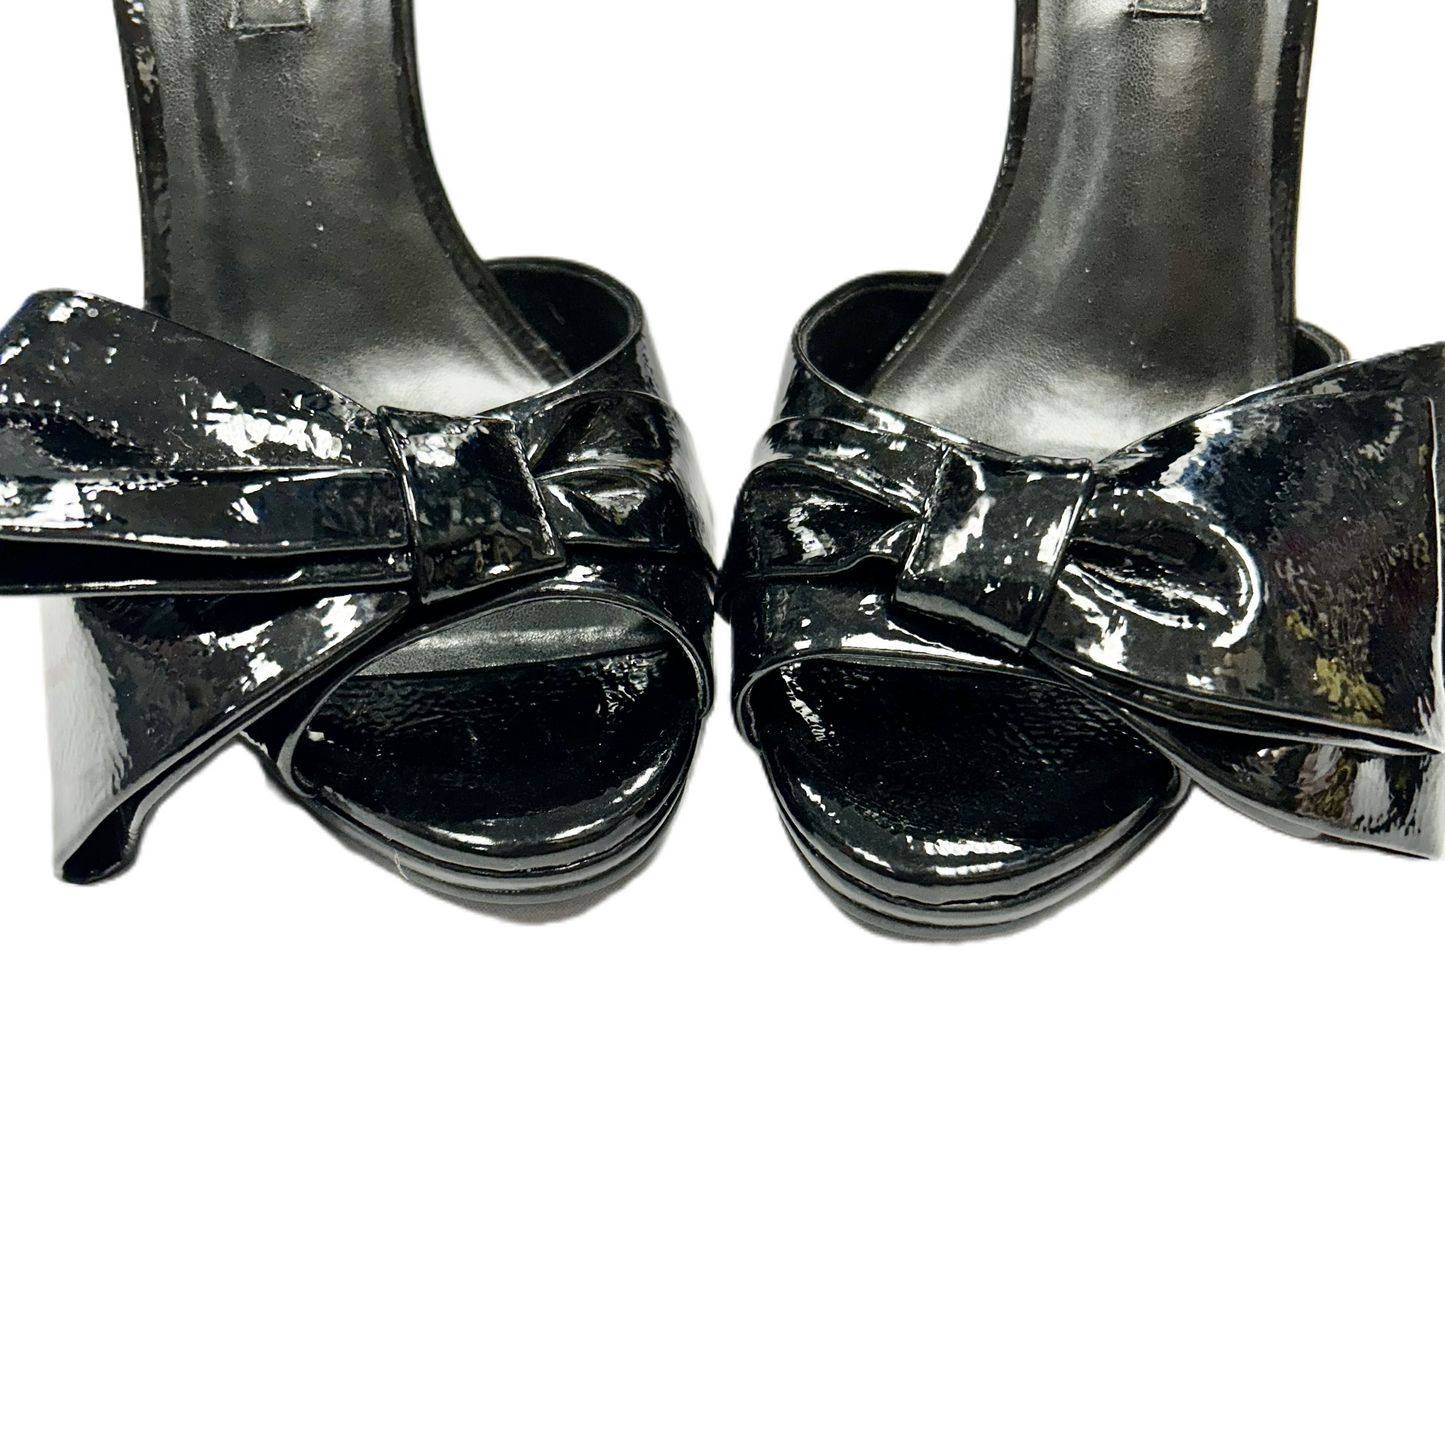 Sandals Heels Stiletto By Nine West  Size: 10